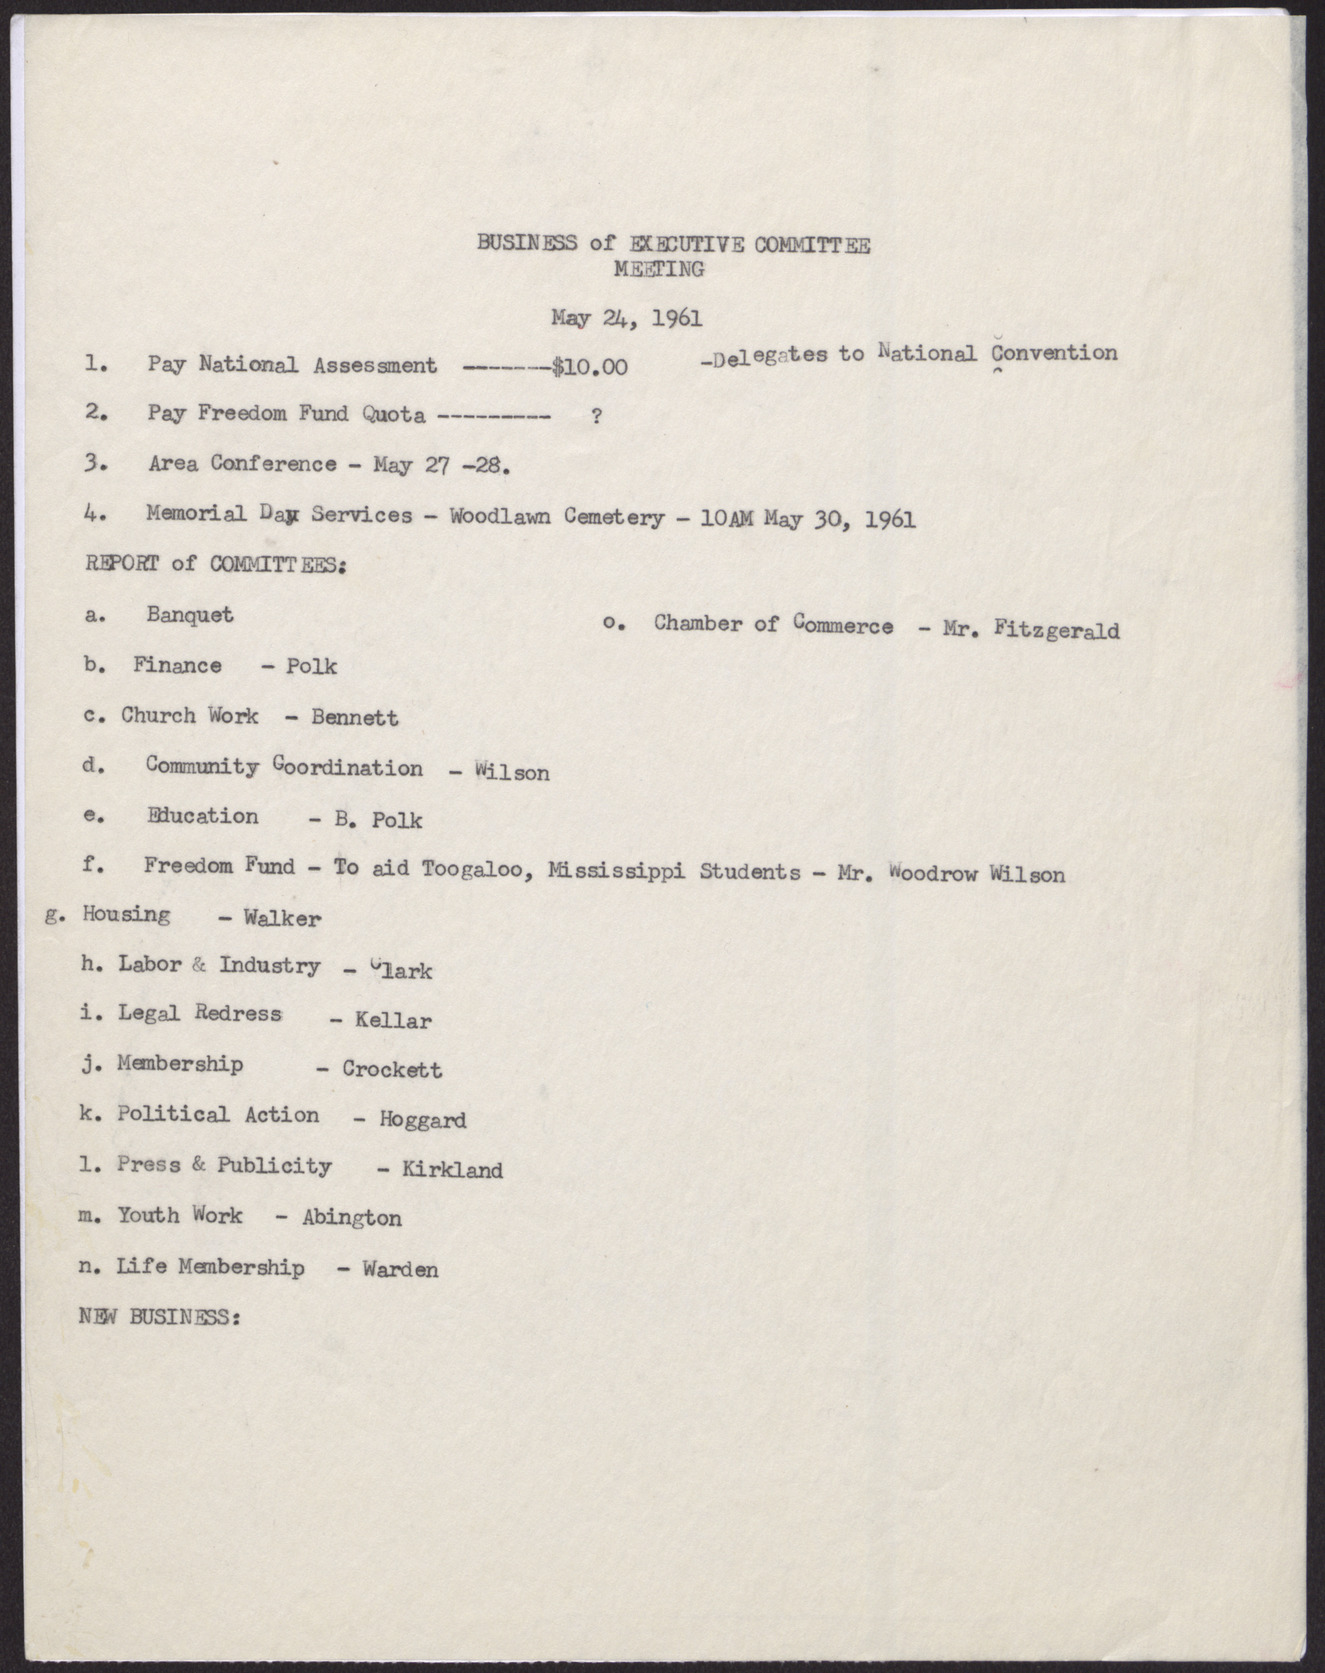 Agenda - Executive Committee meeting, May 24, 1961